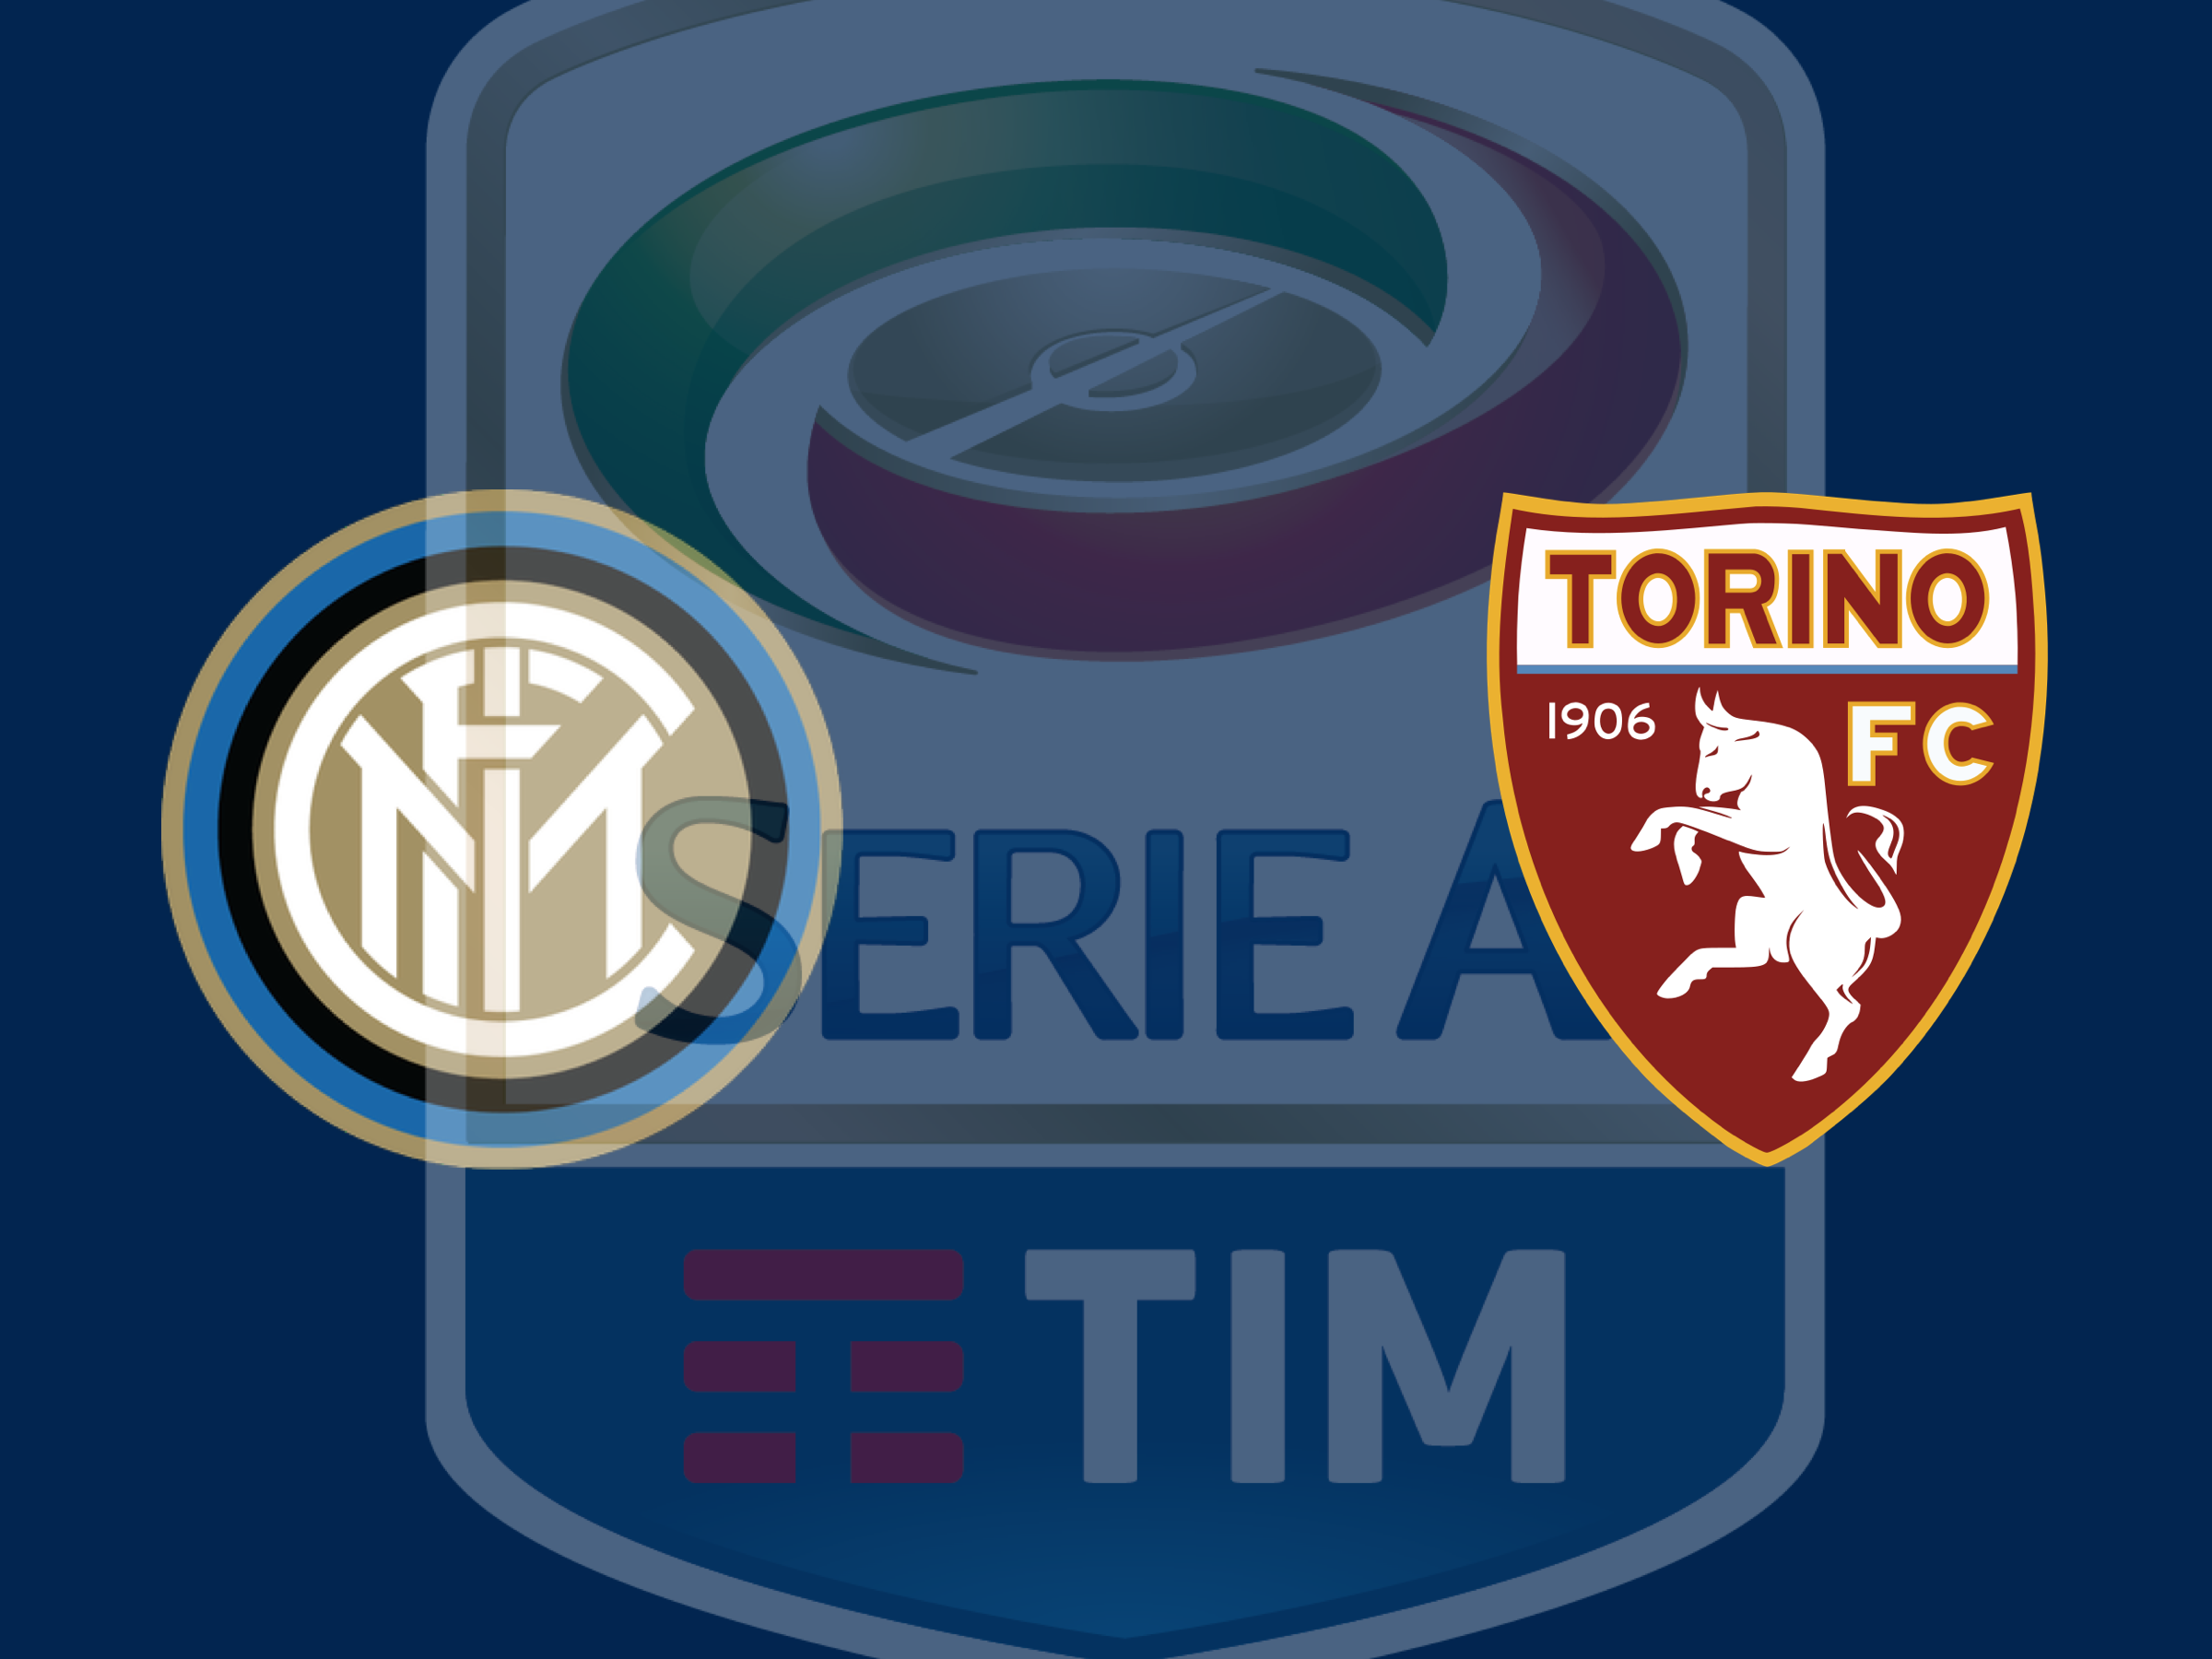 Inter vs torino